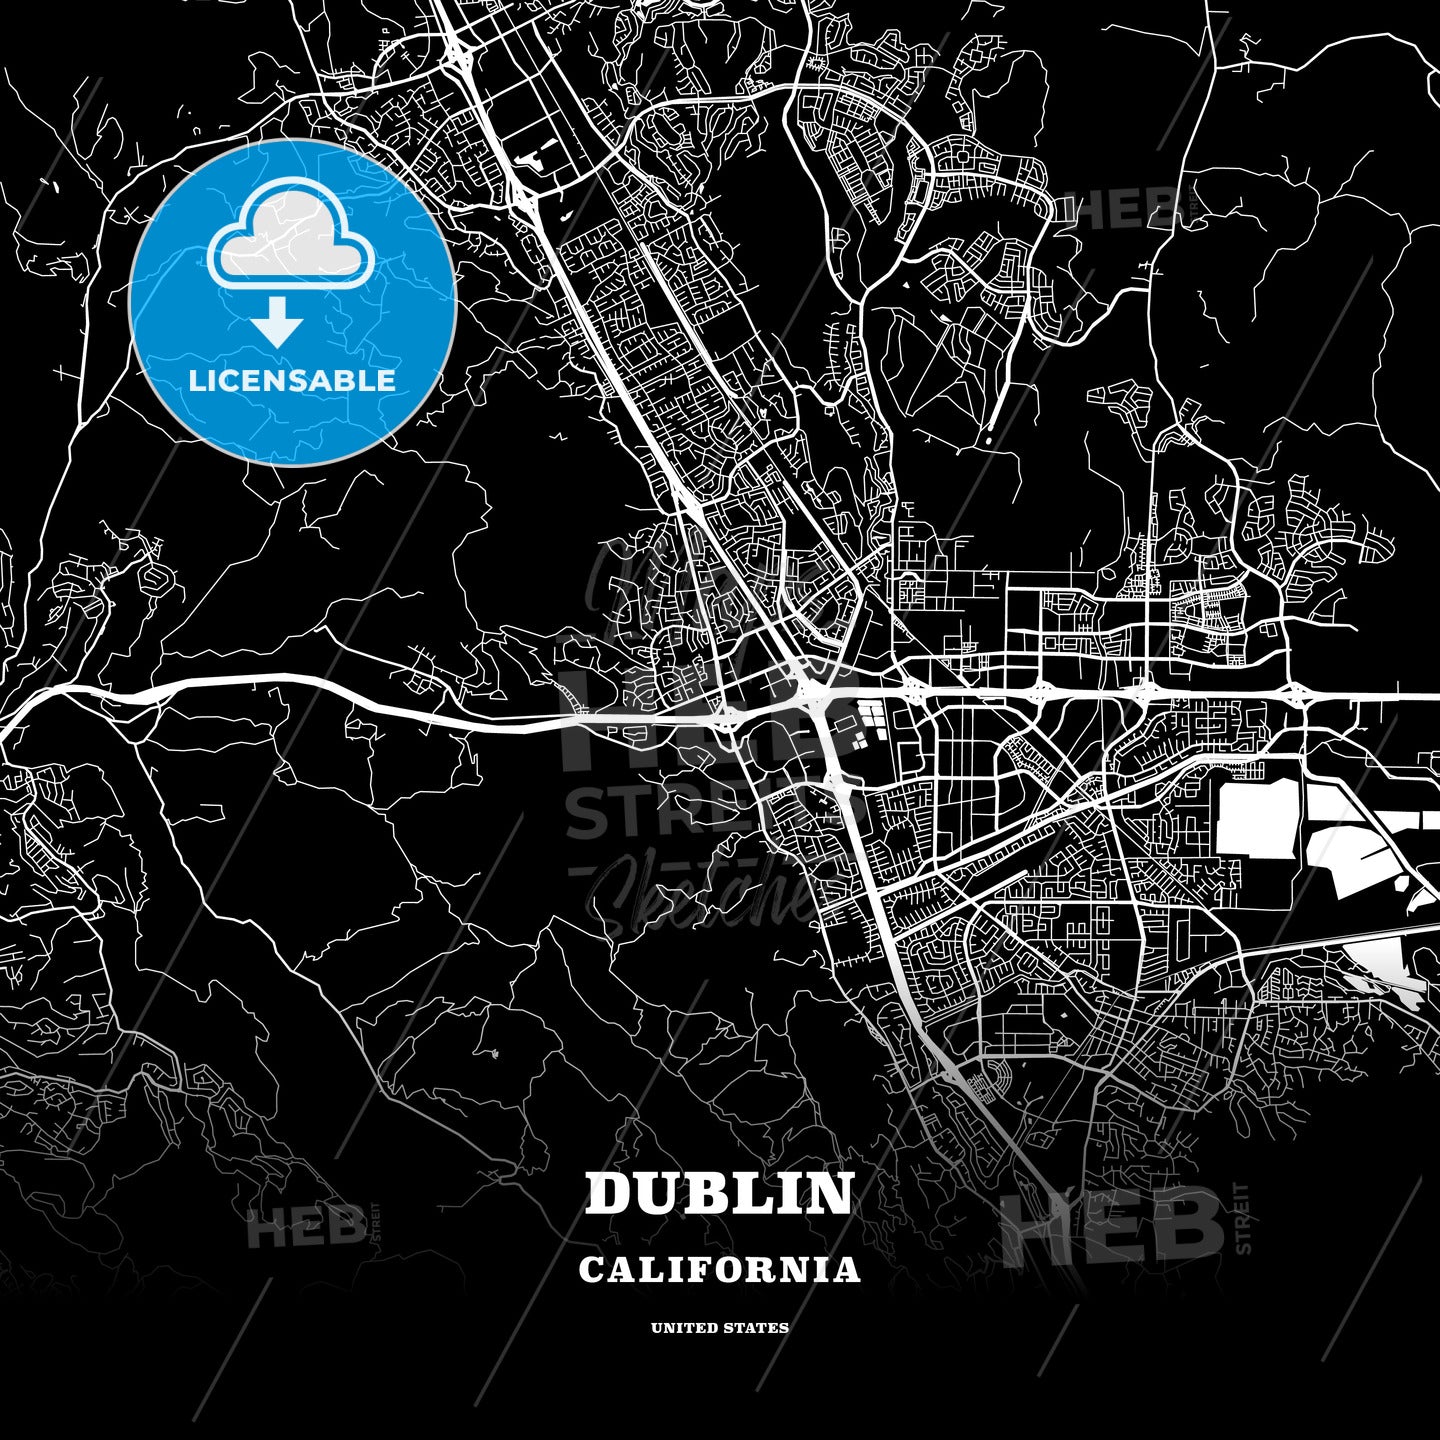 Dublin, California, USA map